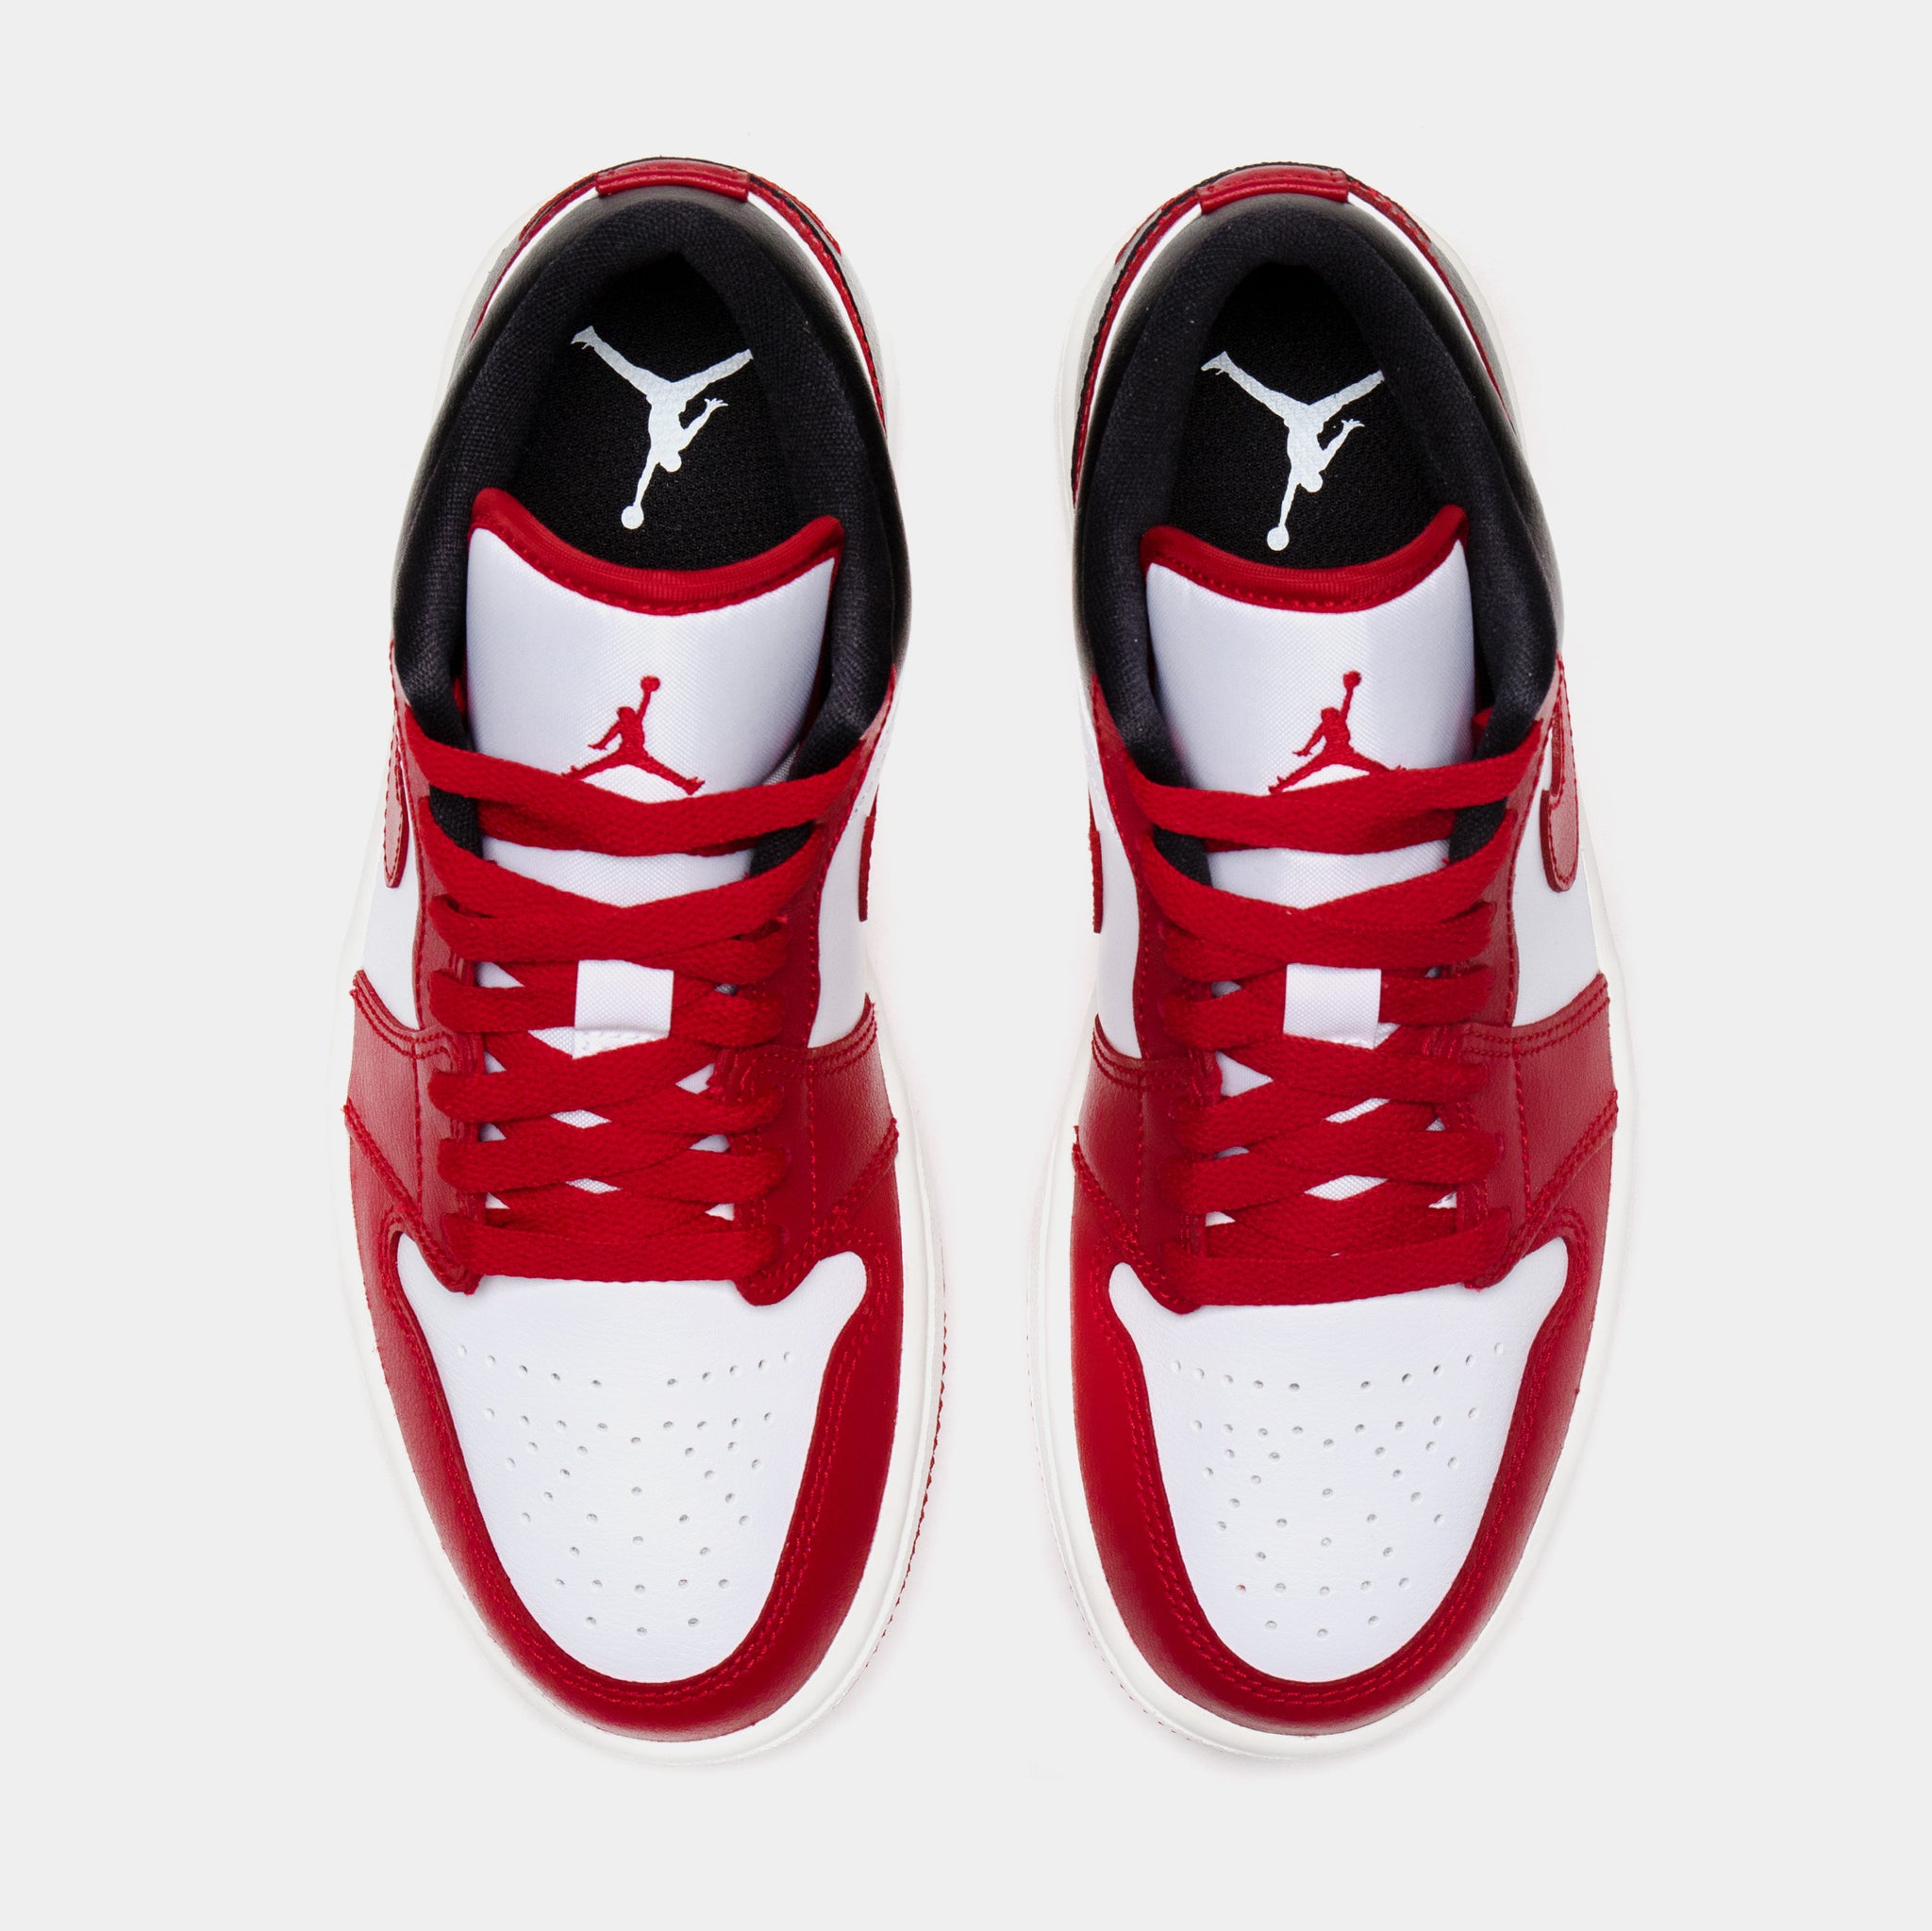 Jordan Air Jordan 1 Retro Low Gym Red Womens Lifestyle Shoes Black